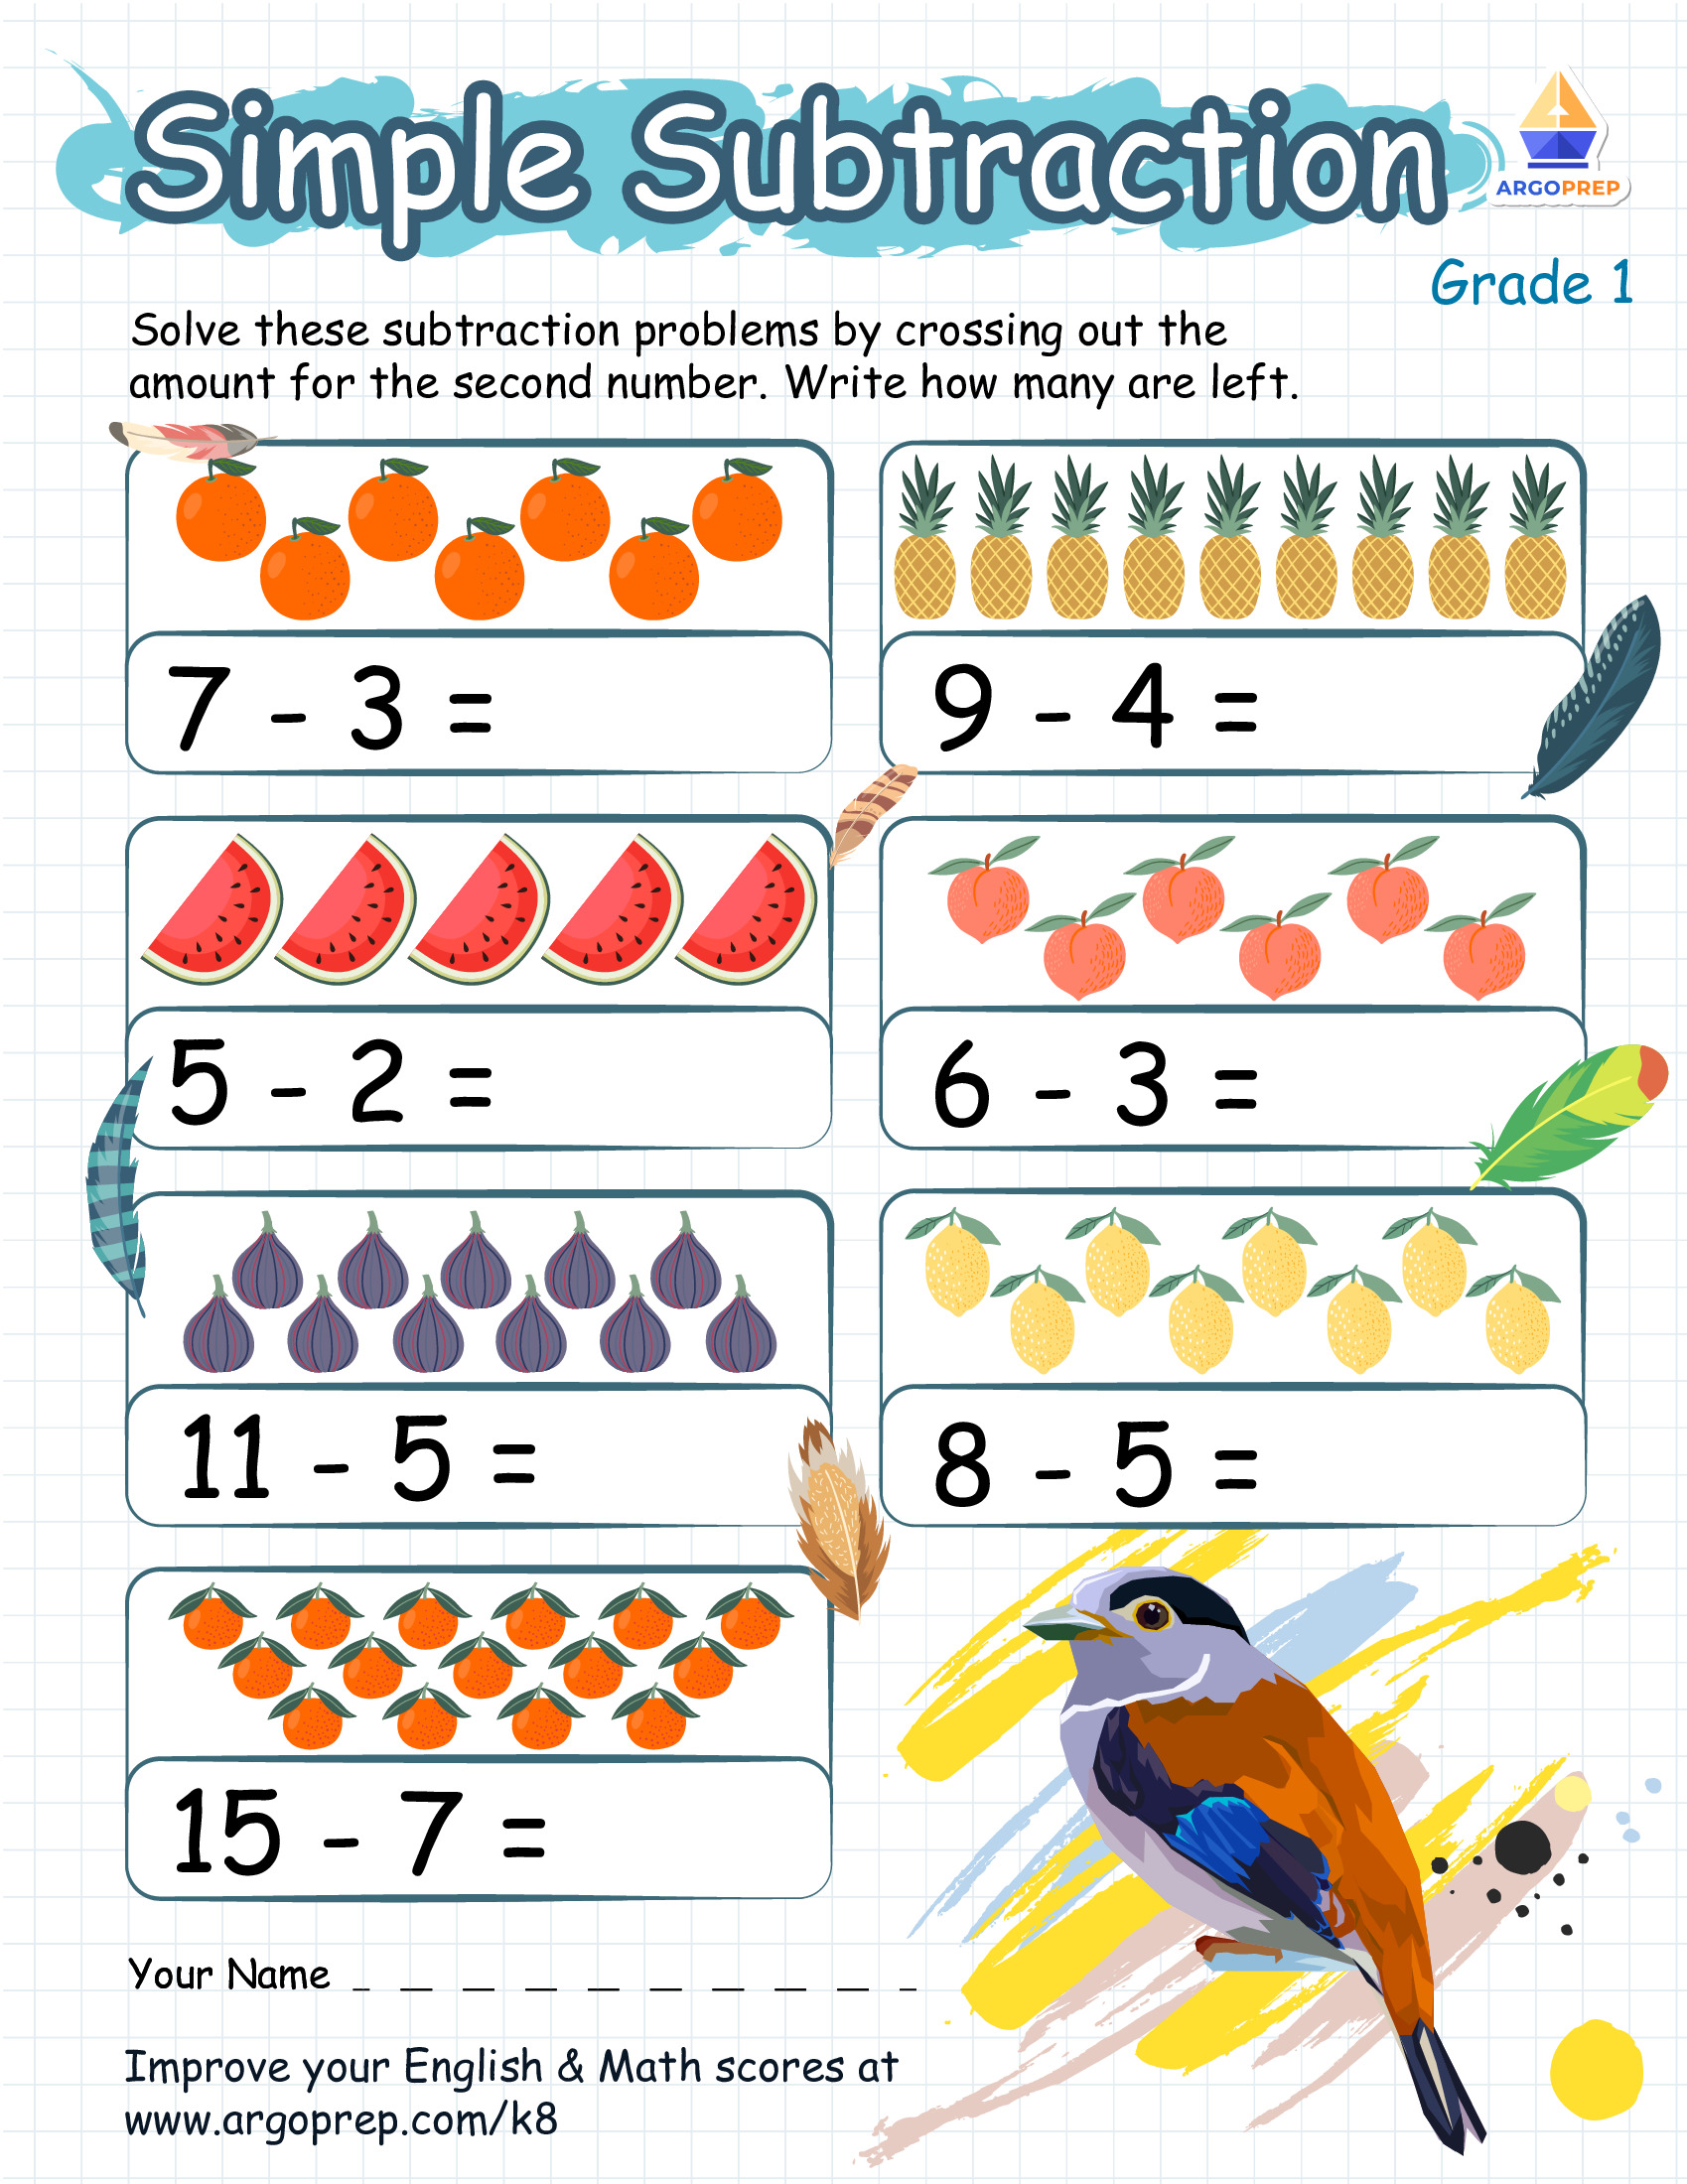 1st-grade-subtraction-worksheets-free-printable-k5-learning-grade-1-math-worksheet-subtracting